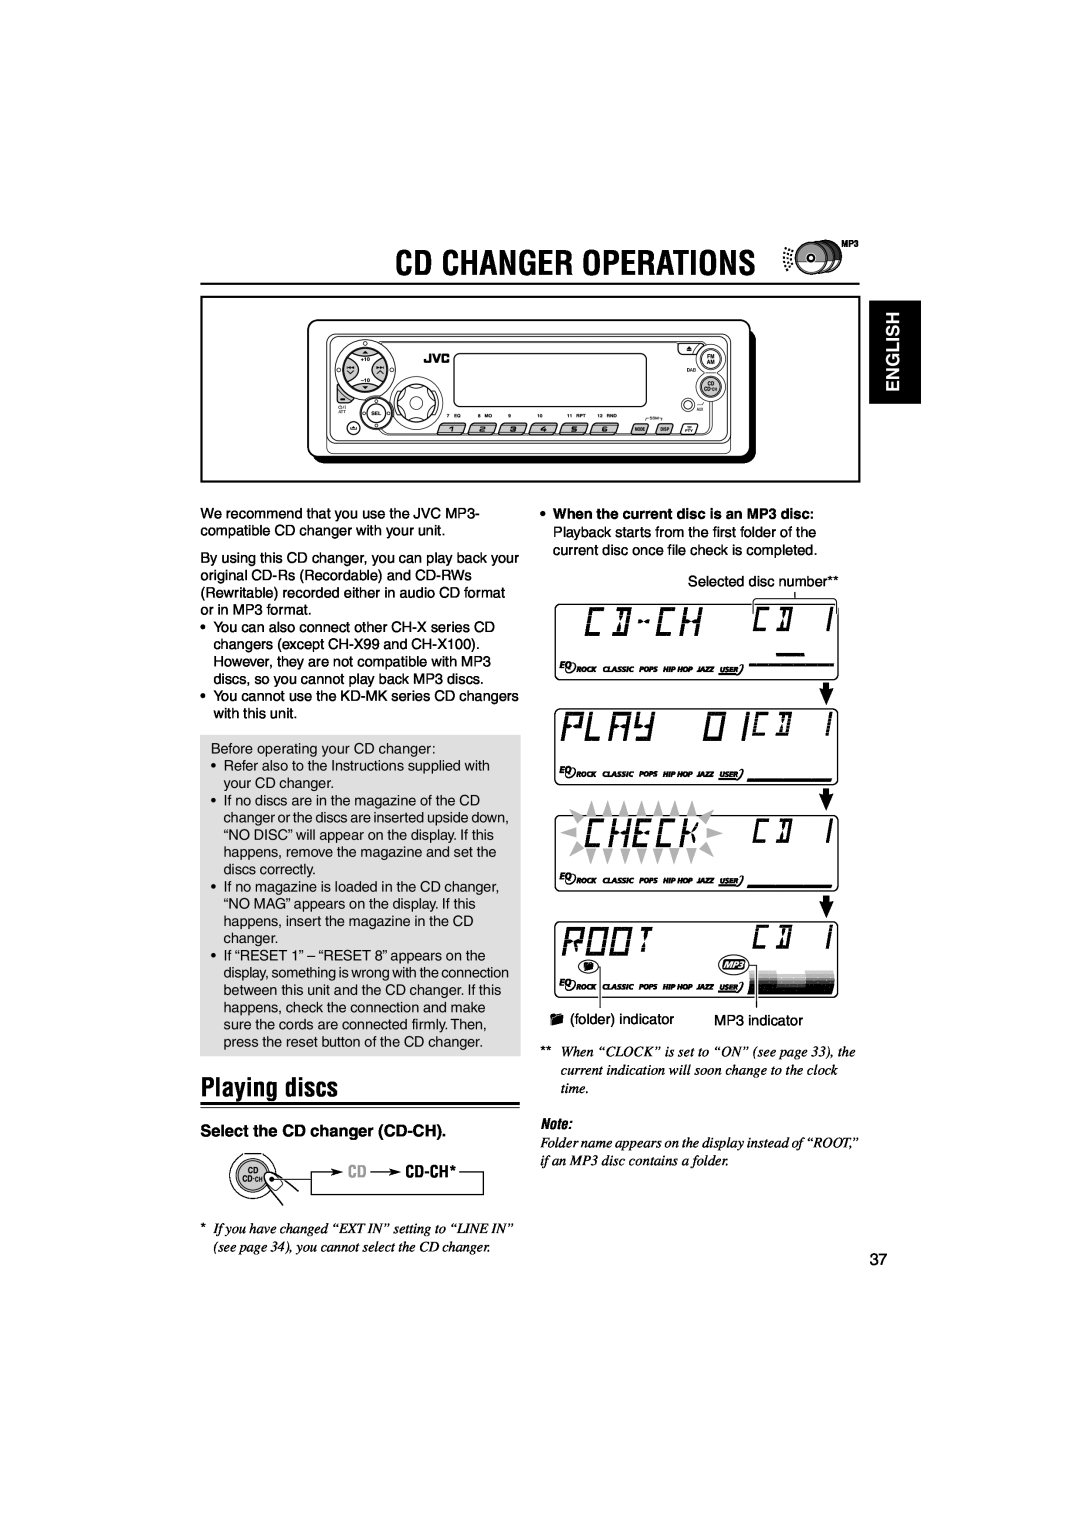 JVC GET0126-001A manual Cd Changer Operations, Playing discs, Select the CD changer CD-CH CD CD-CH, English 